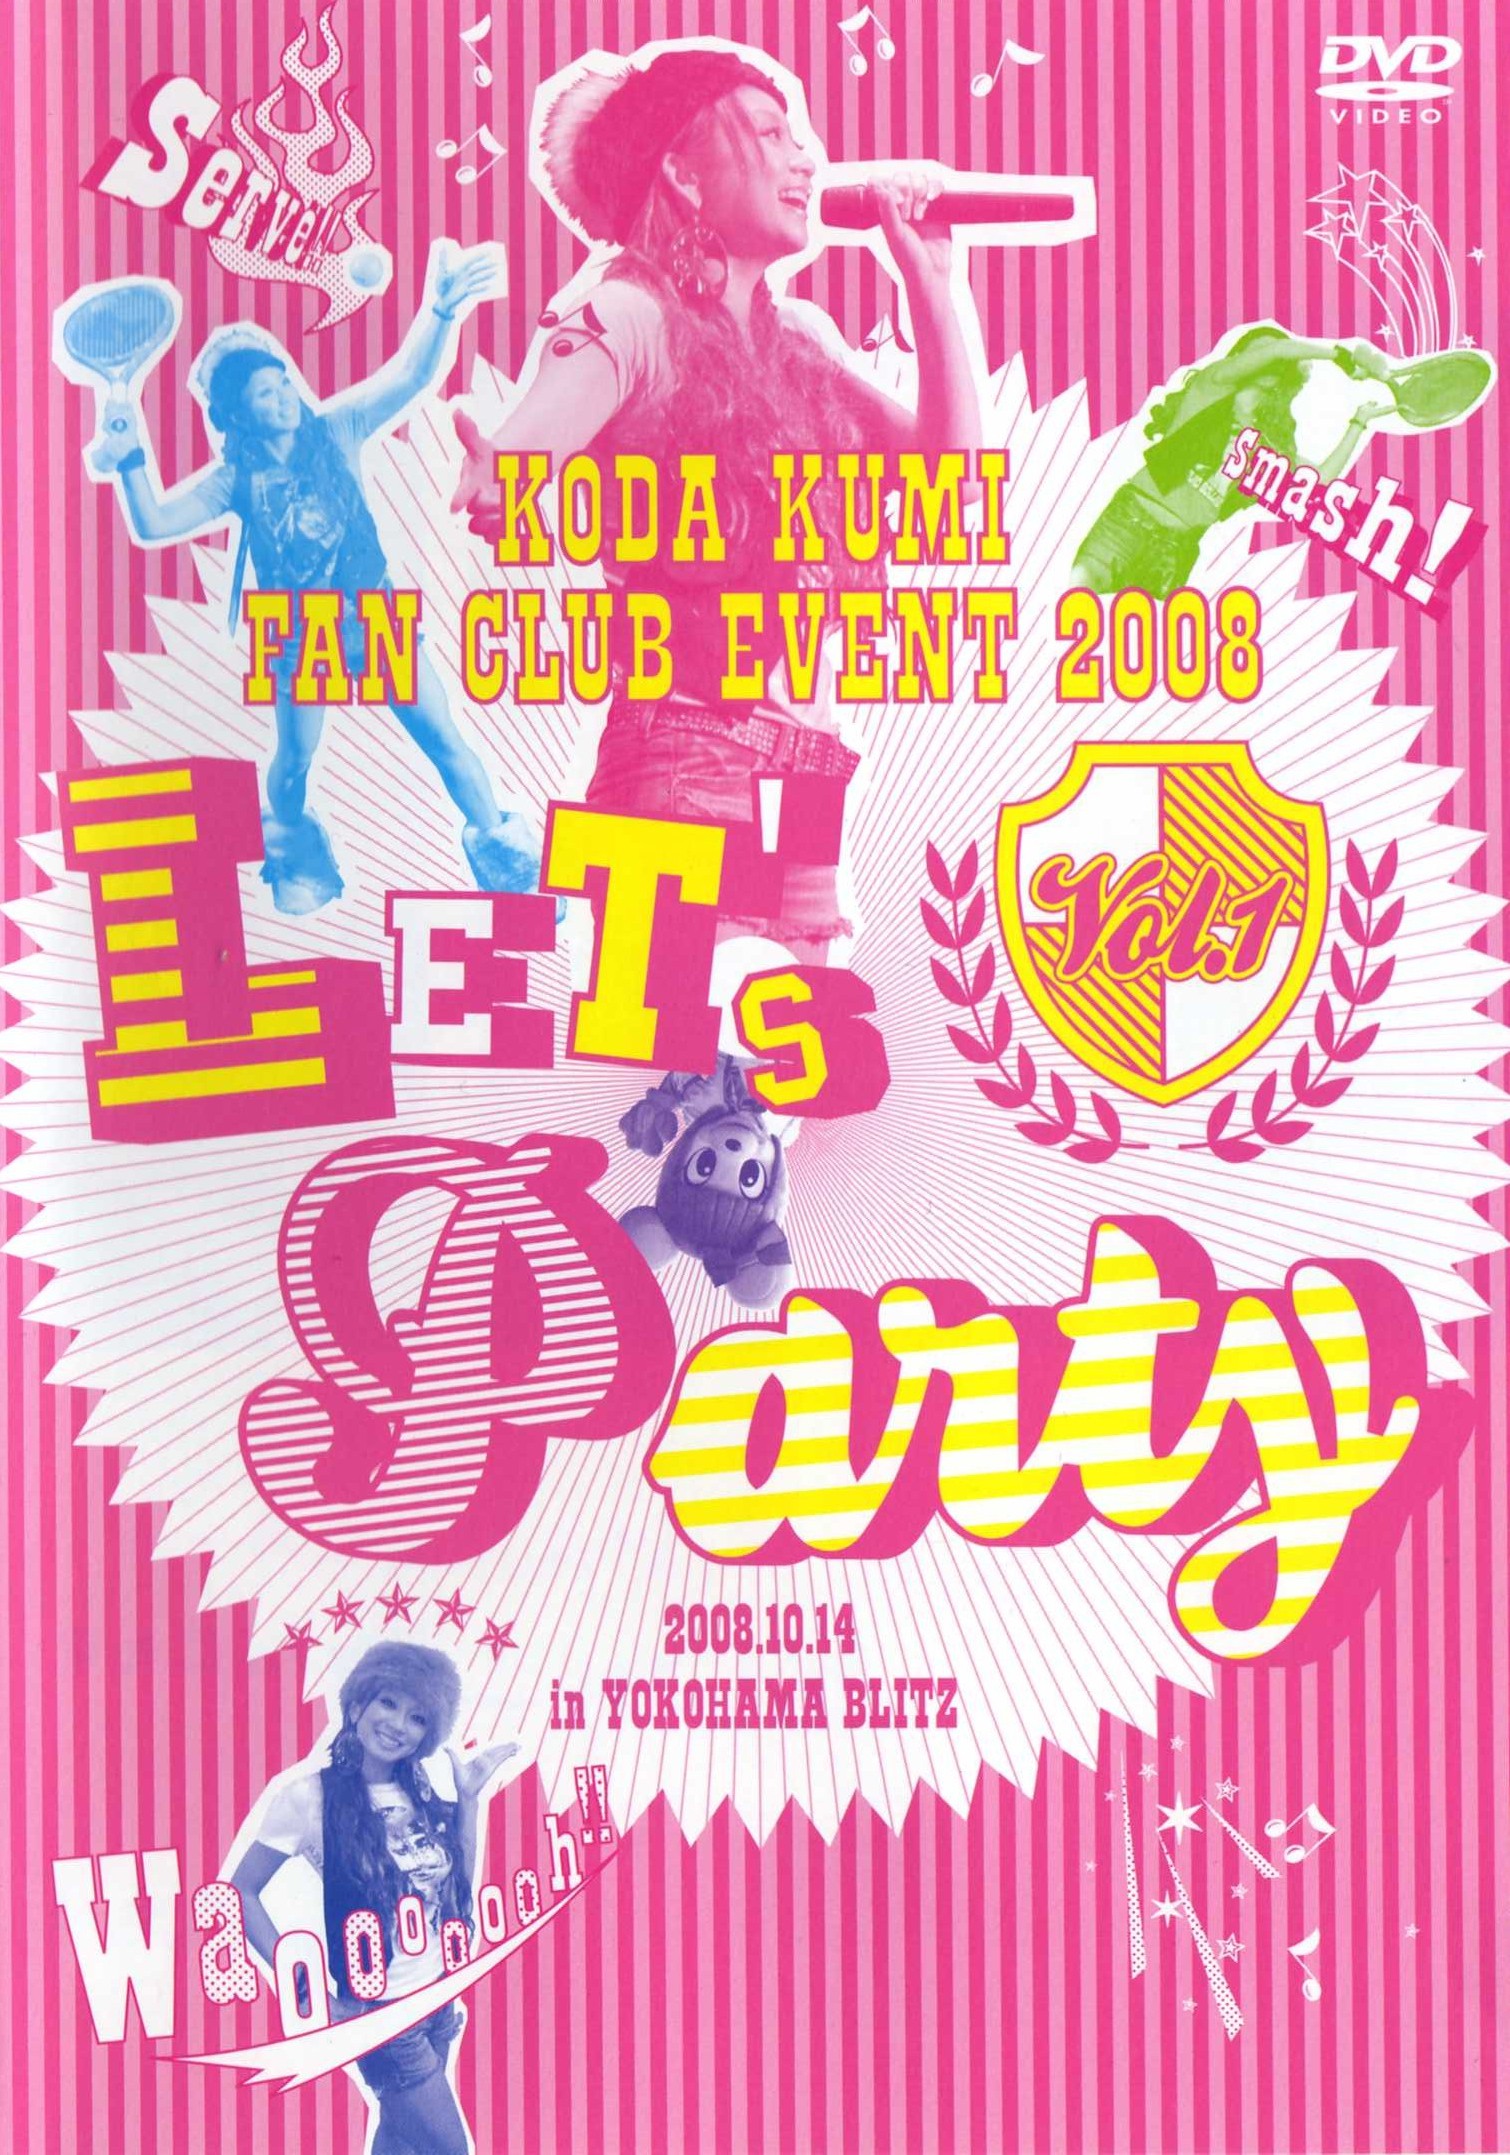 Fan Club Event 2008: Let's Party Vol. 1 (DVD)